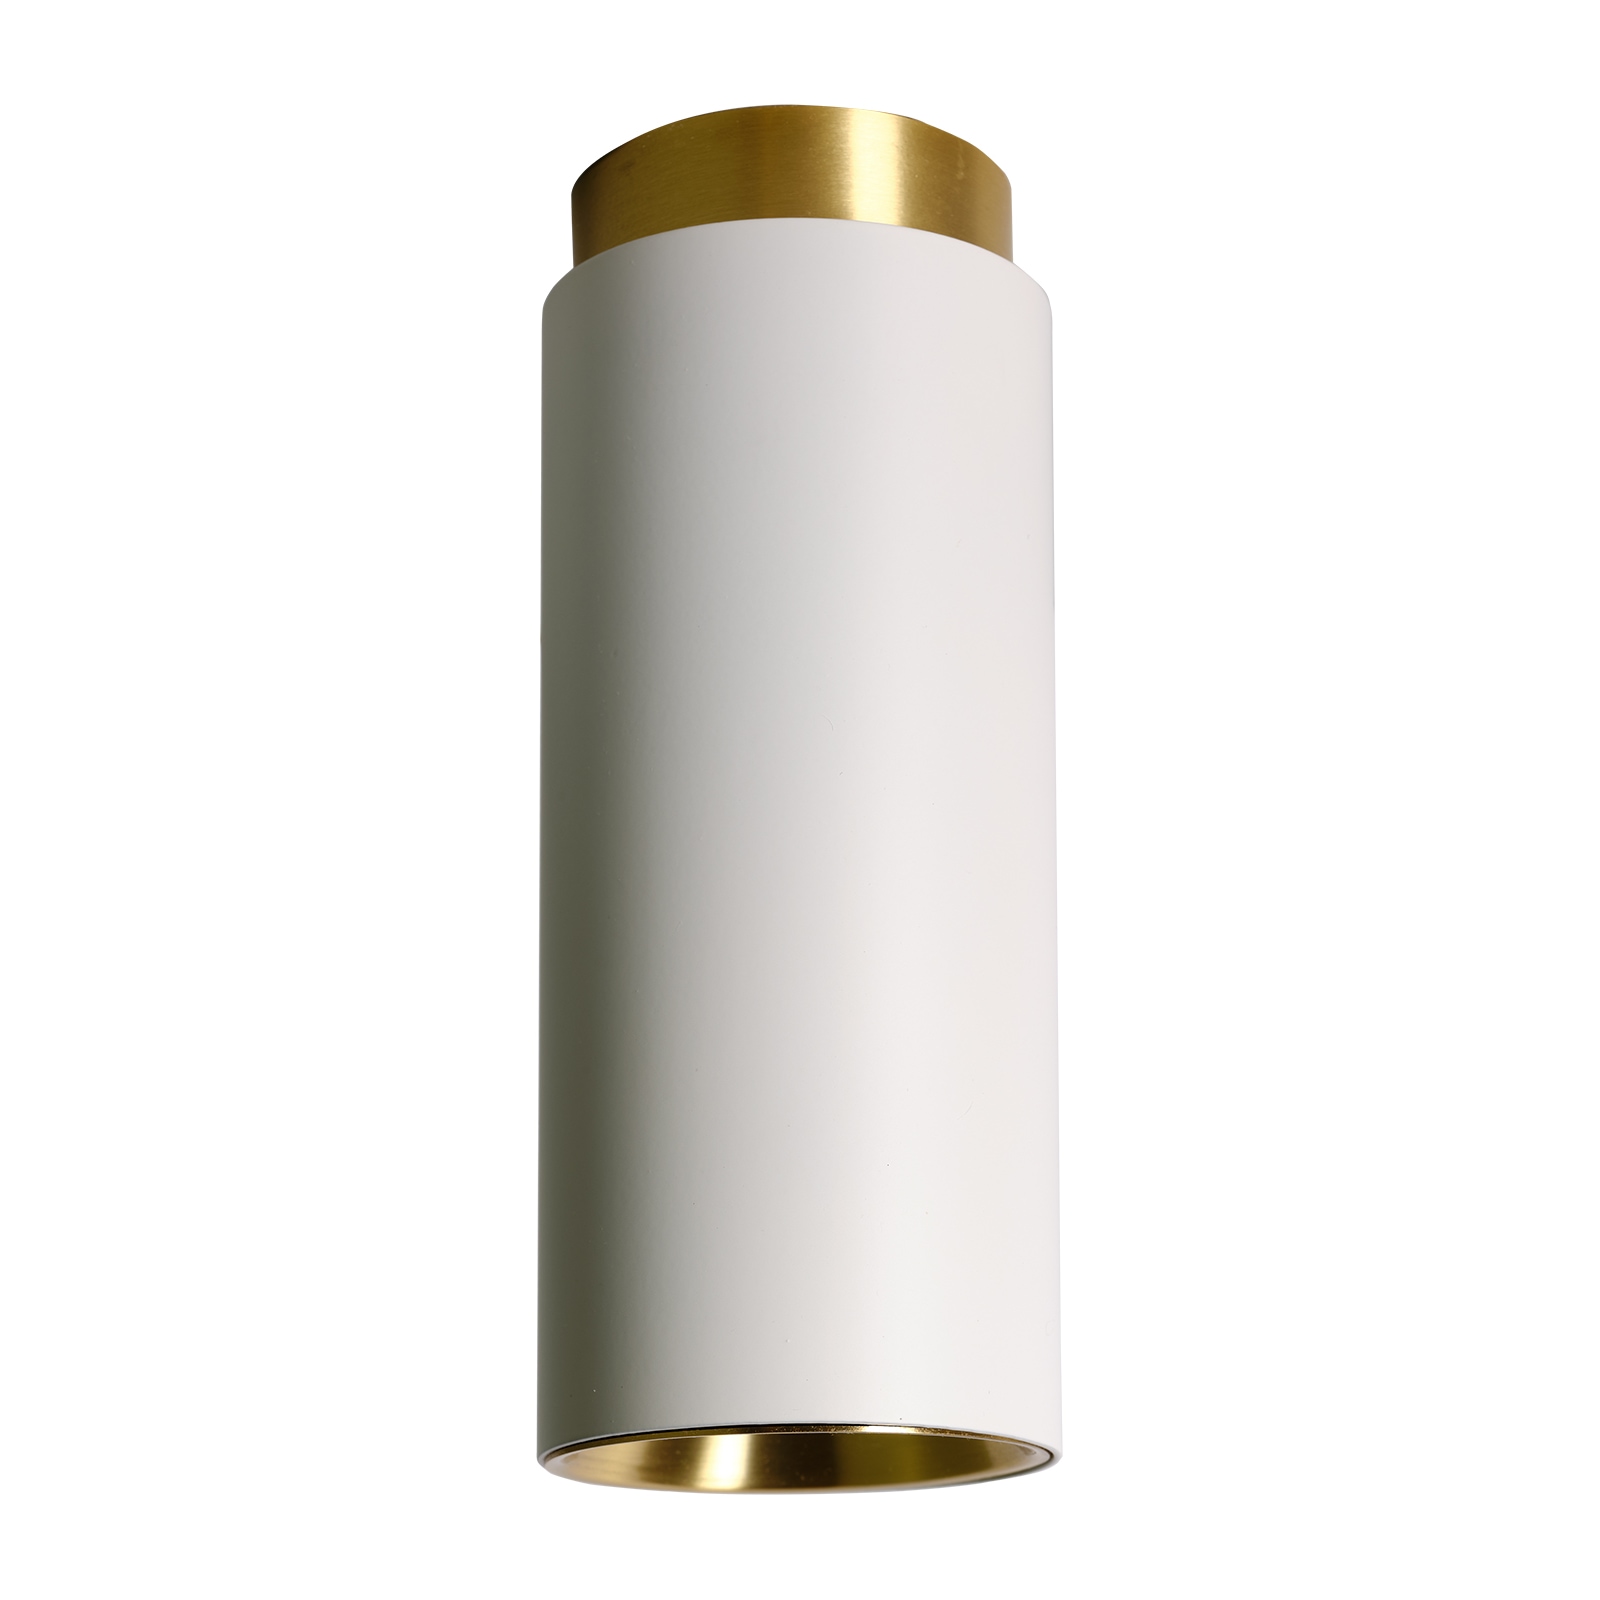 Brass Ceiling Spot TOBO C65: Das weiße Modell